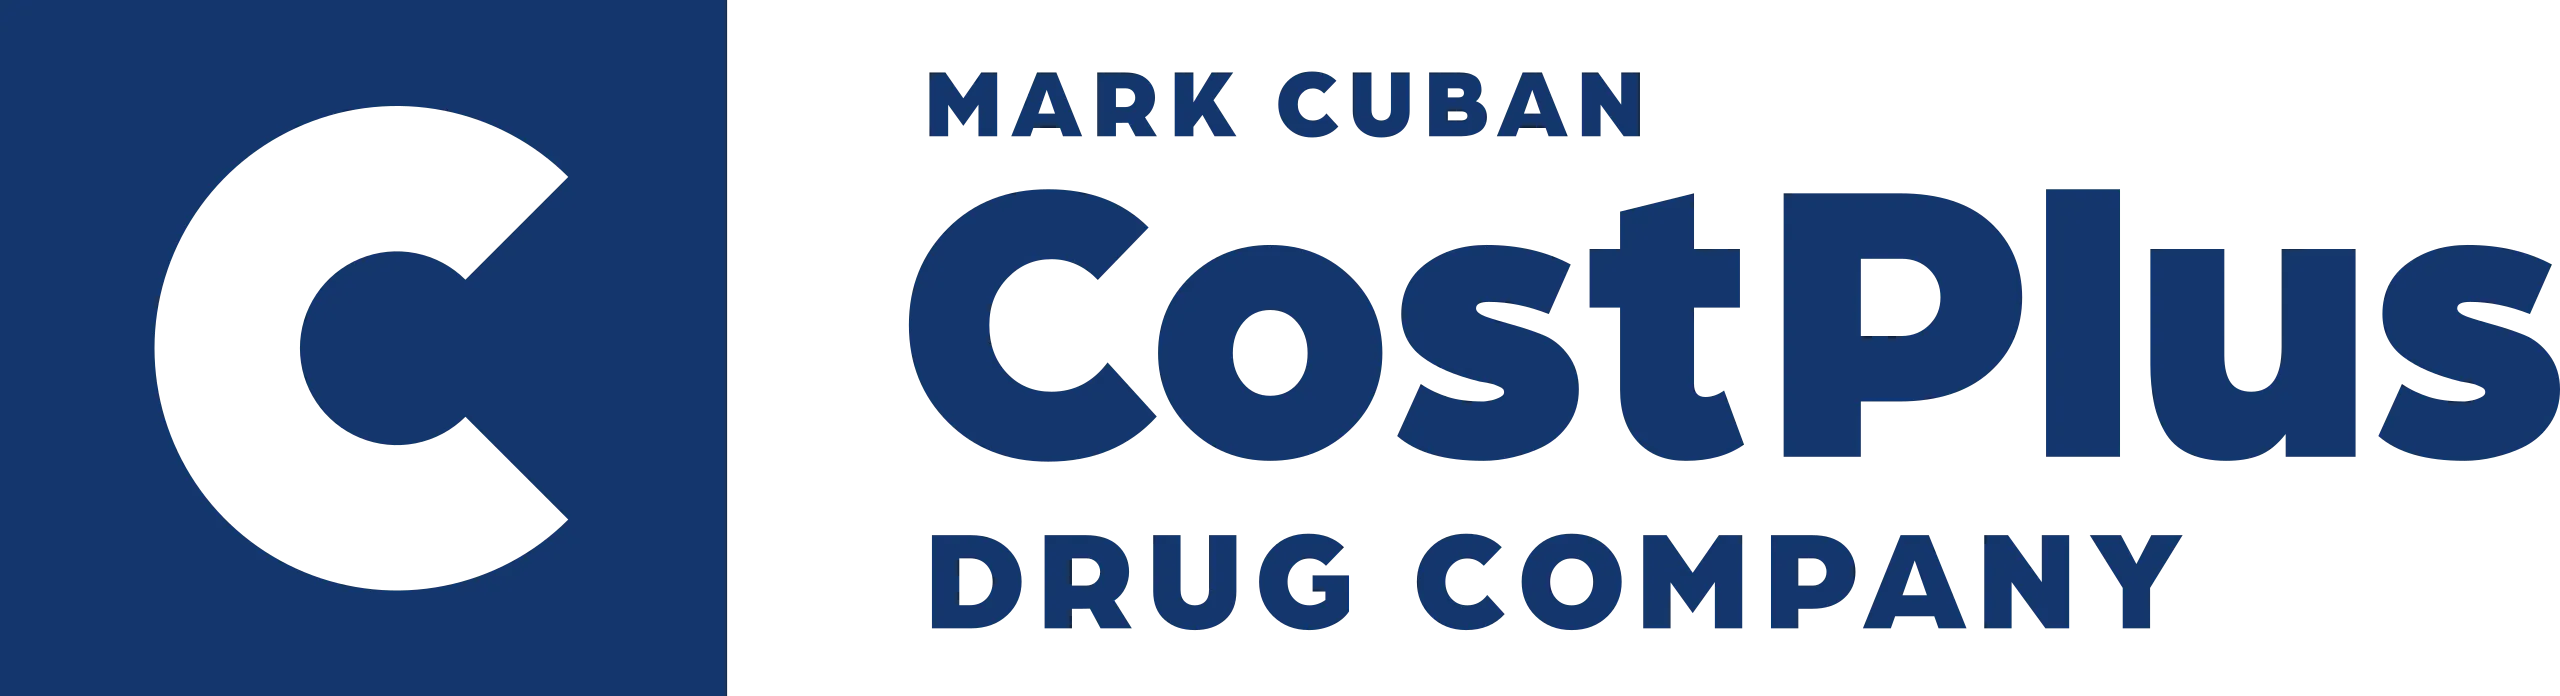 Mark Cuban Cost Plus Drug Company logo